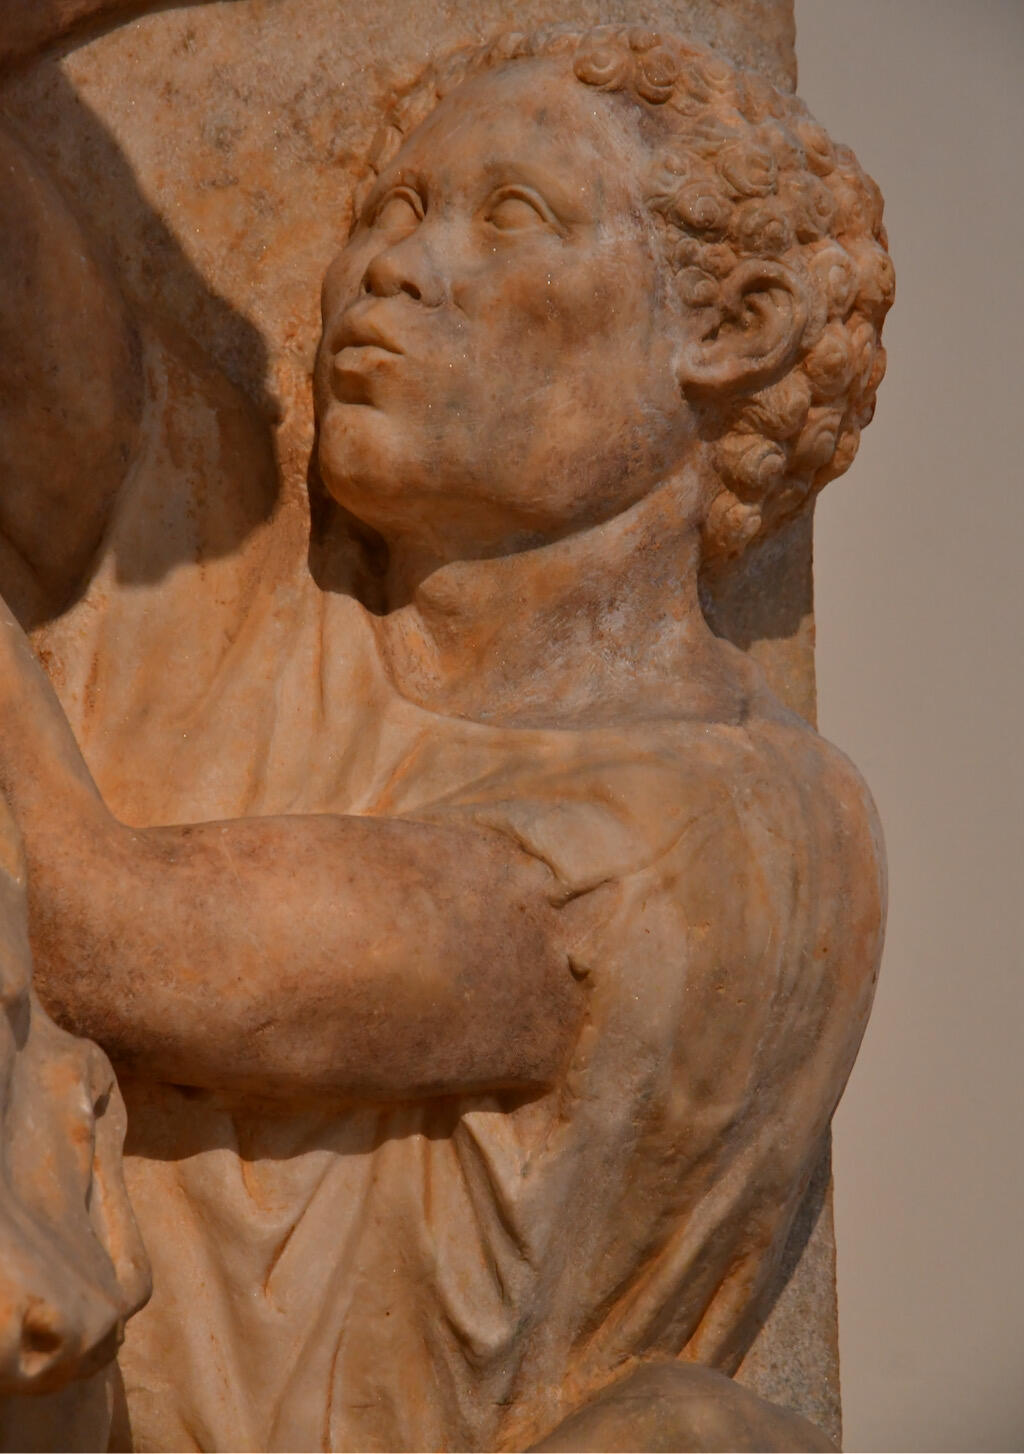 Relief sculpture of an African groom, ancient Greece